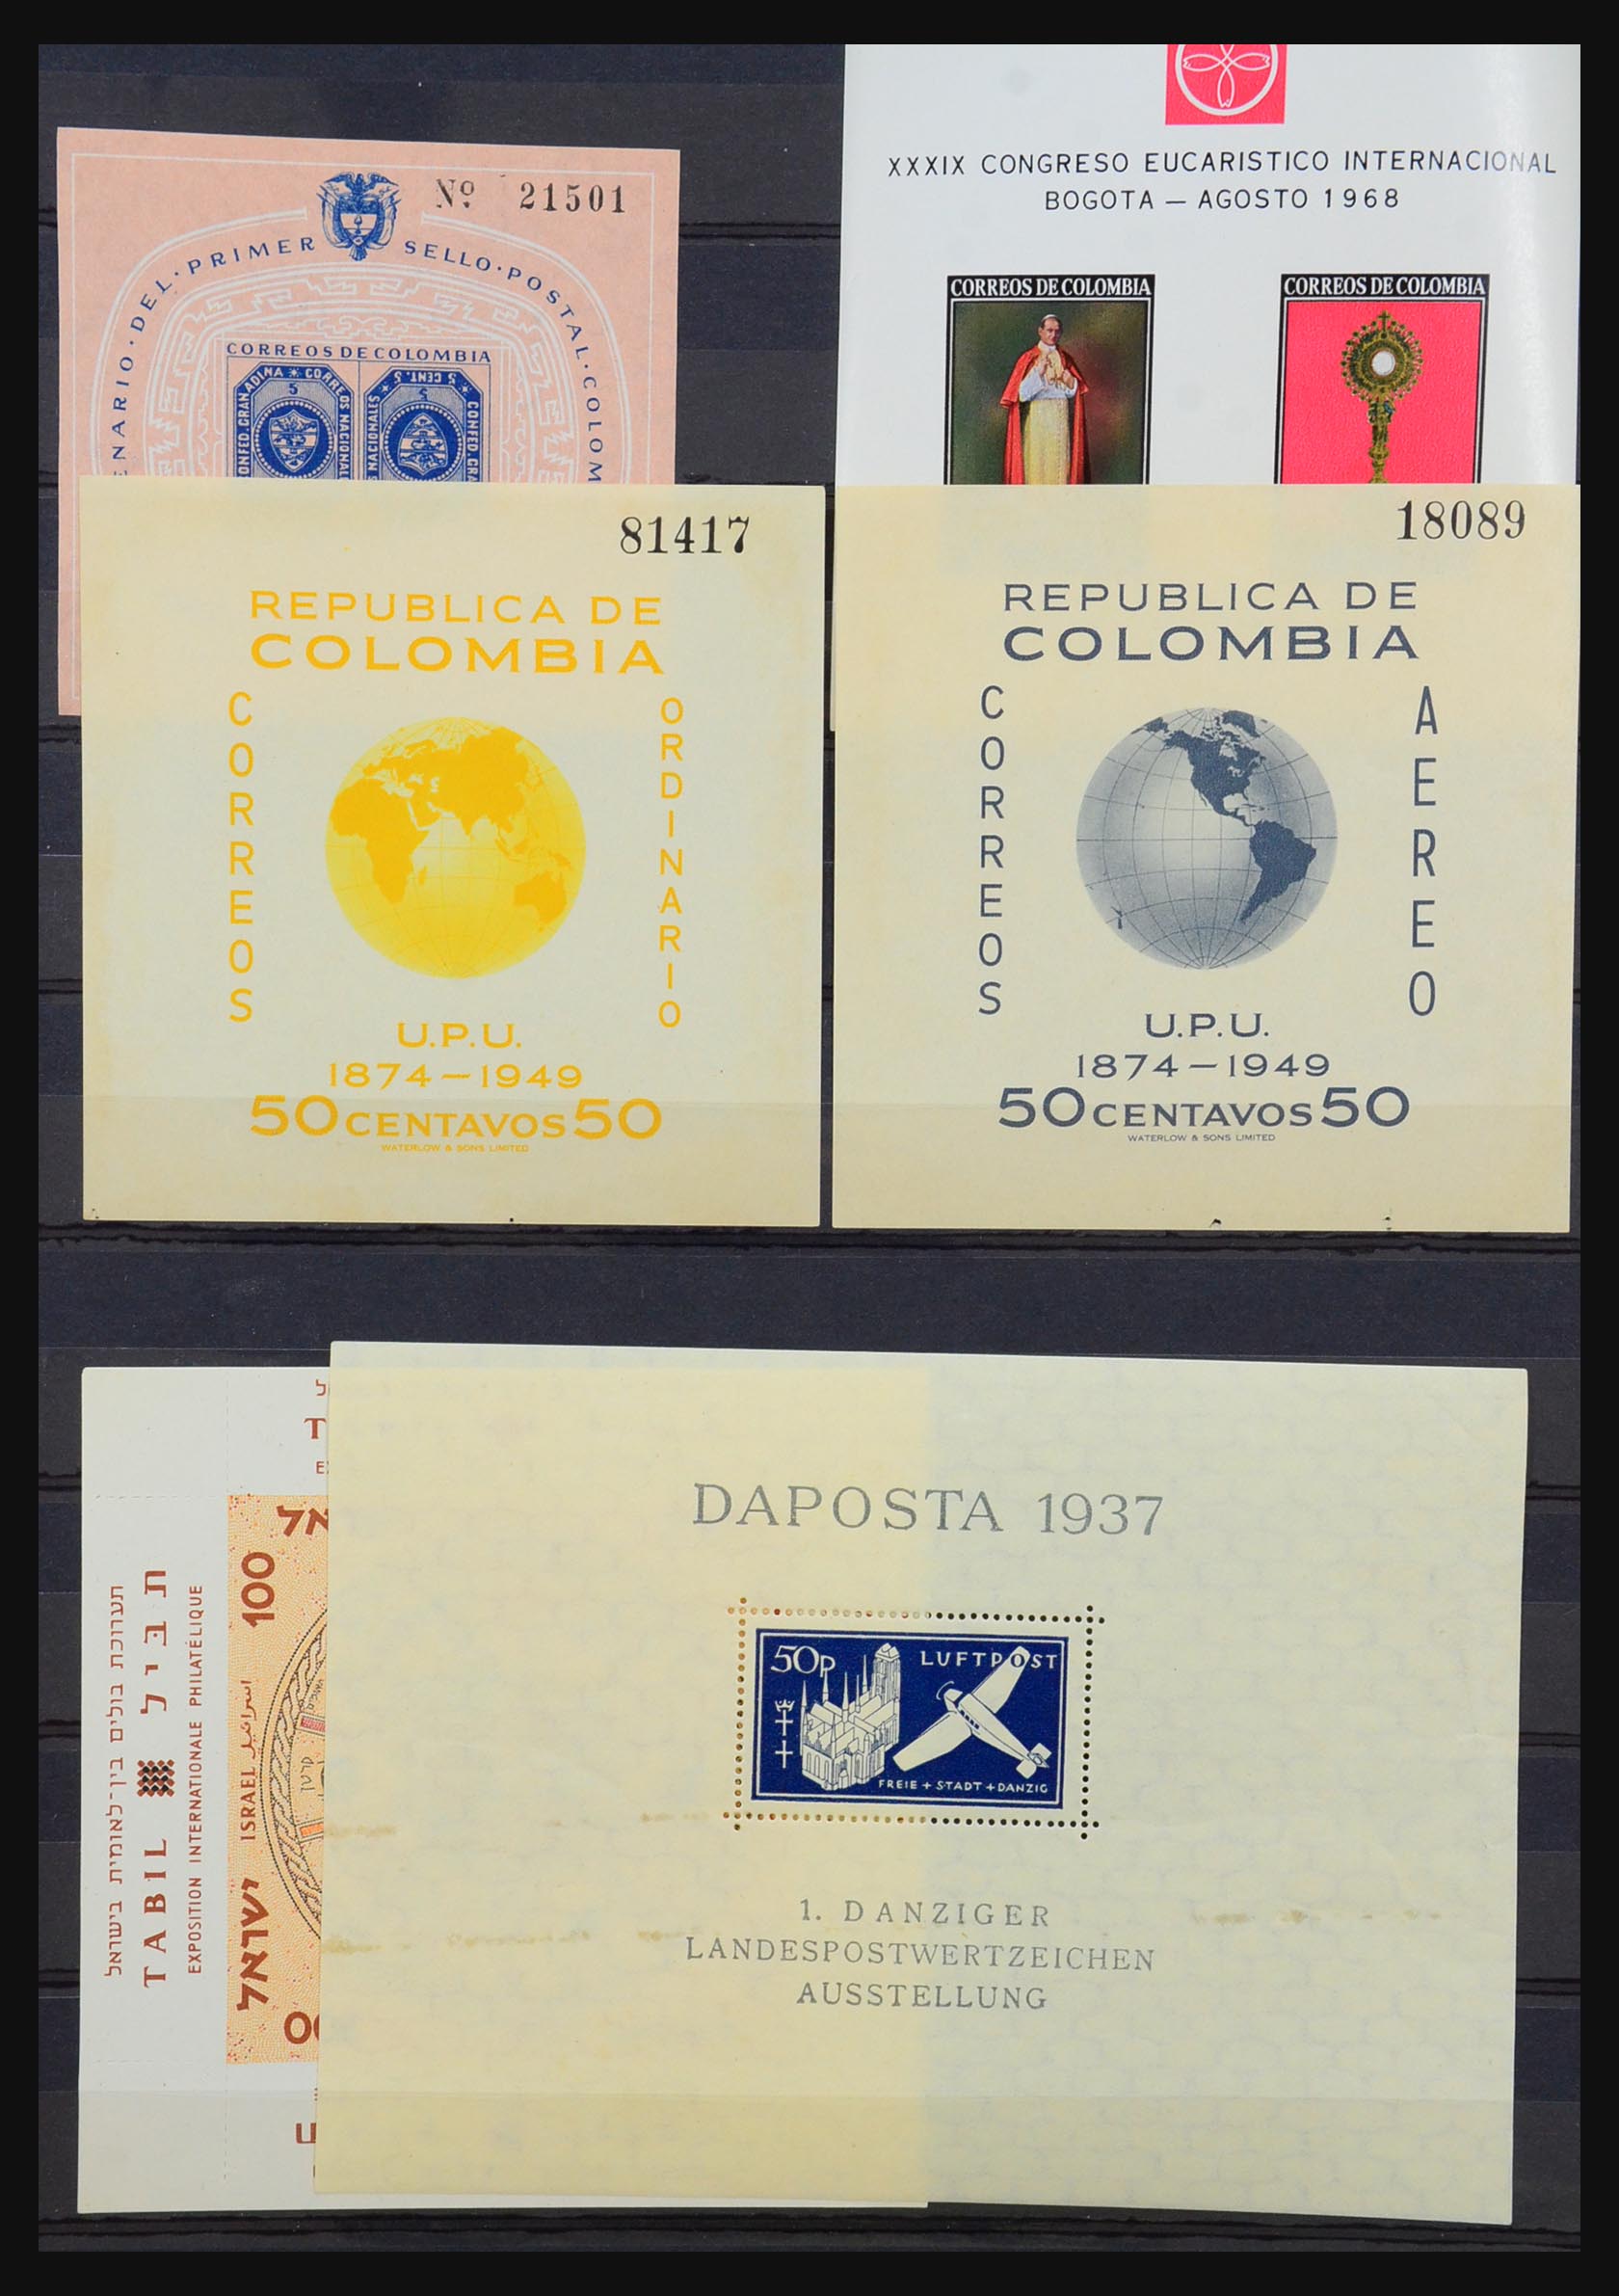 31524 003 - 31524 World souvenir sheets 1937-1985.